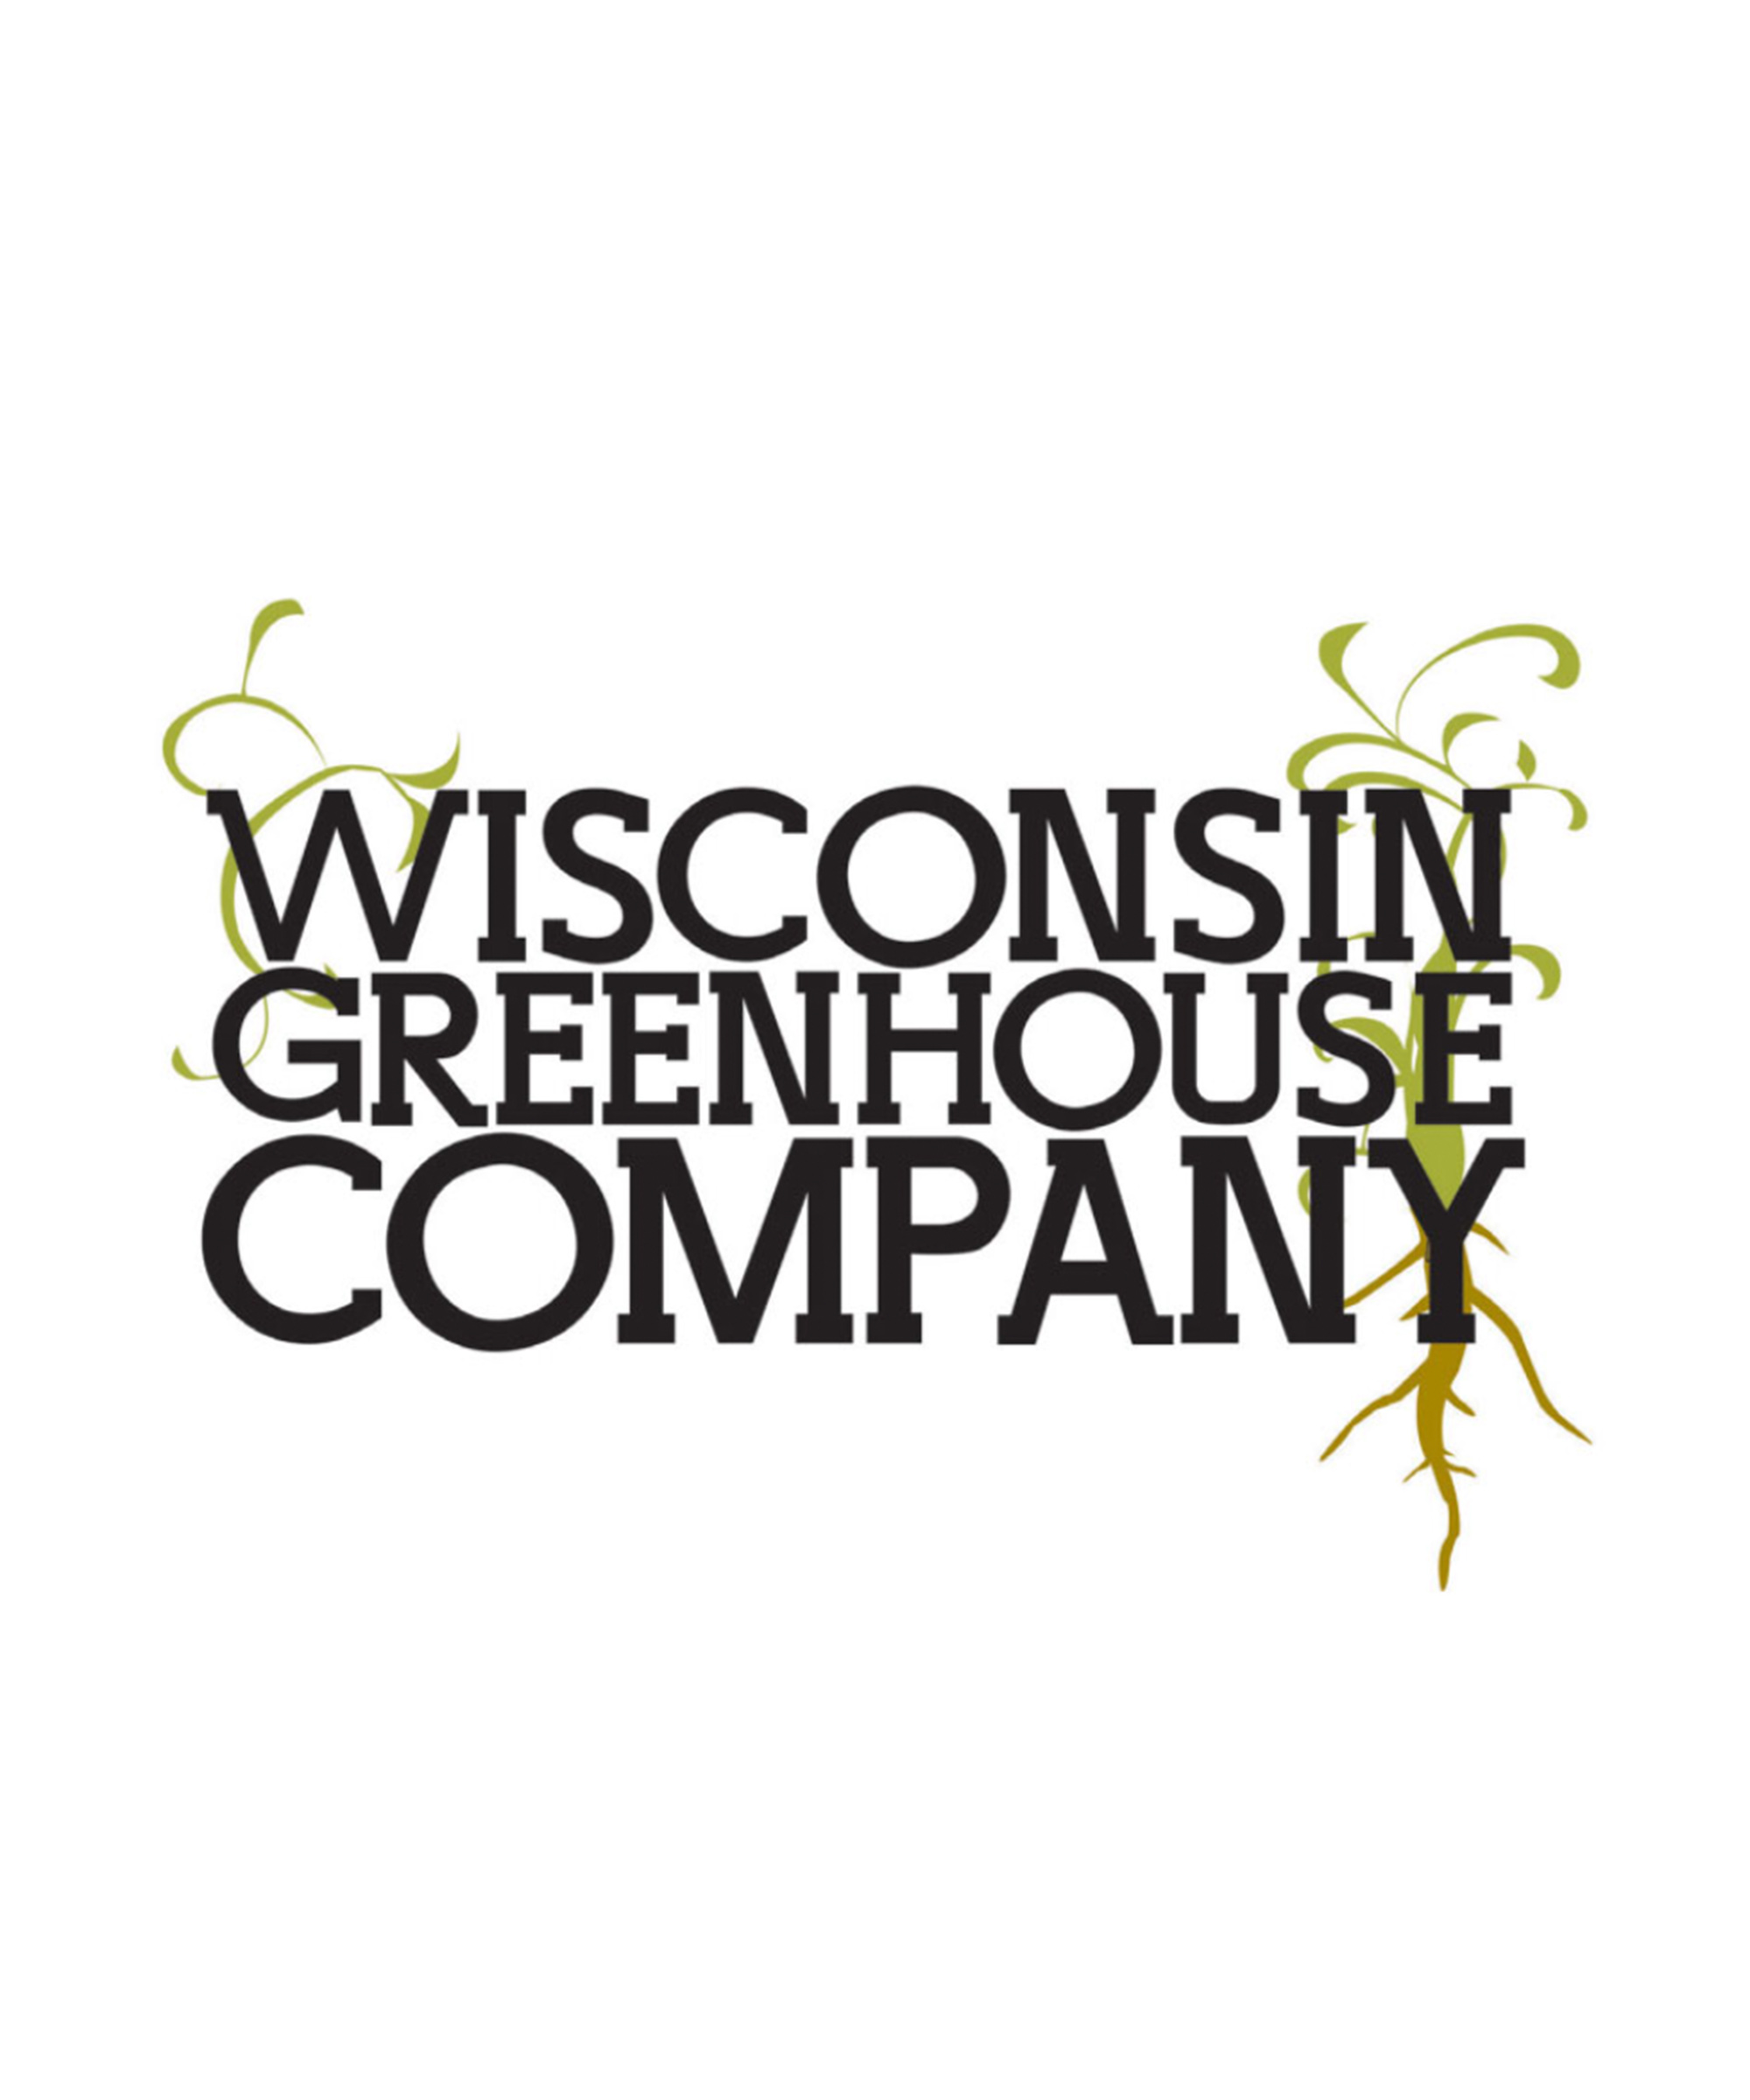  Wisconsin Greenhouse Company